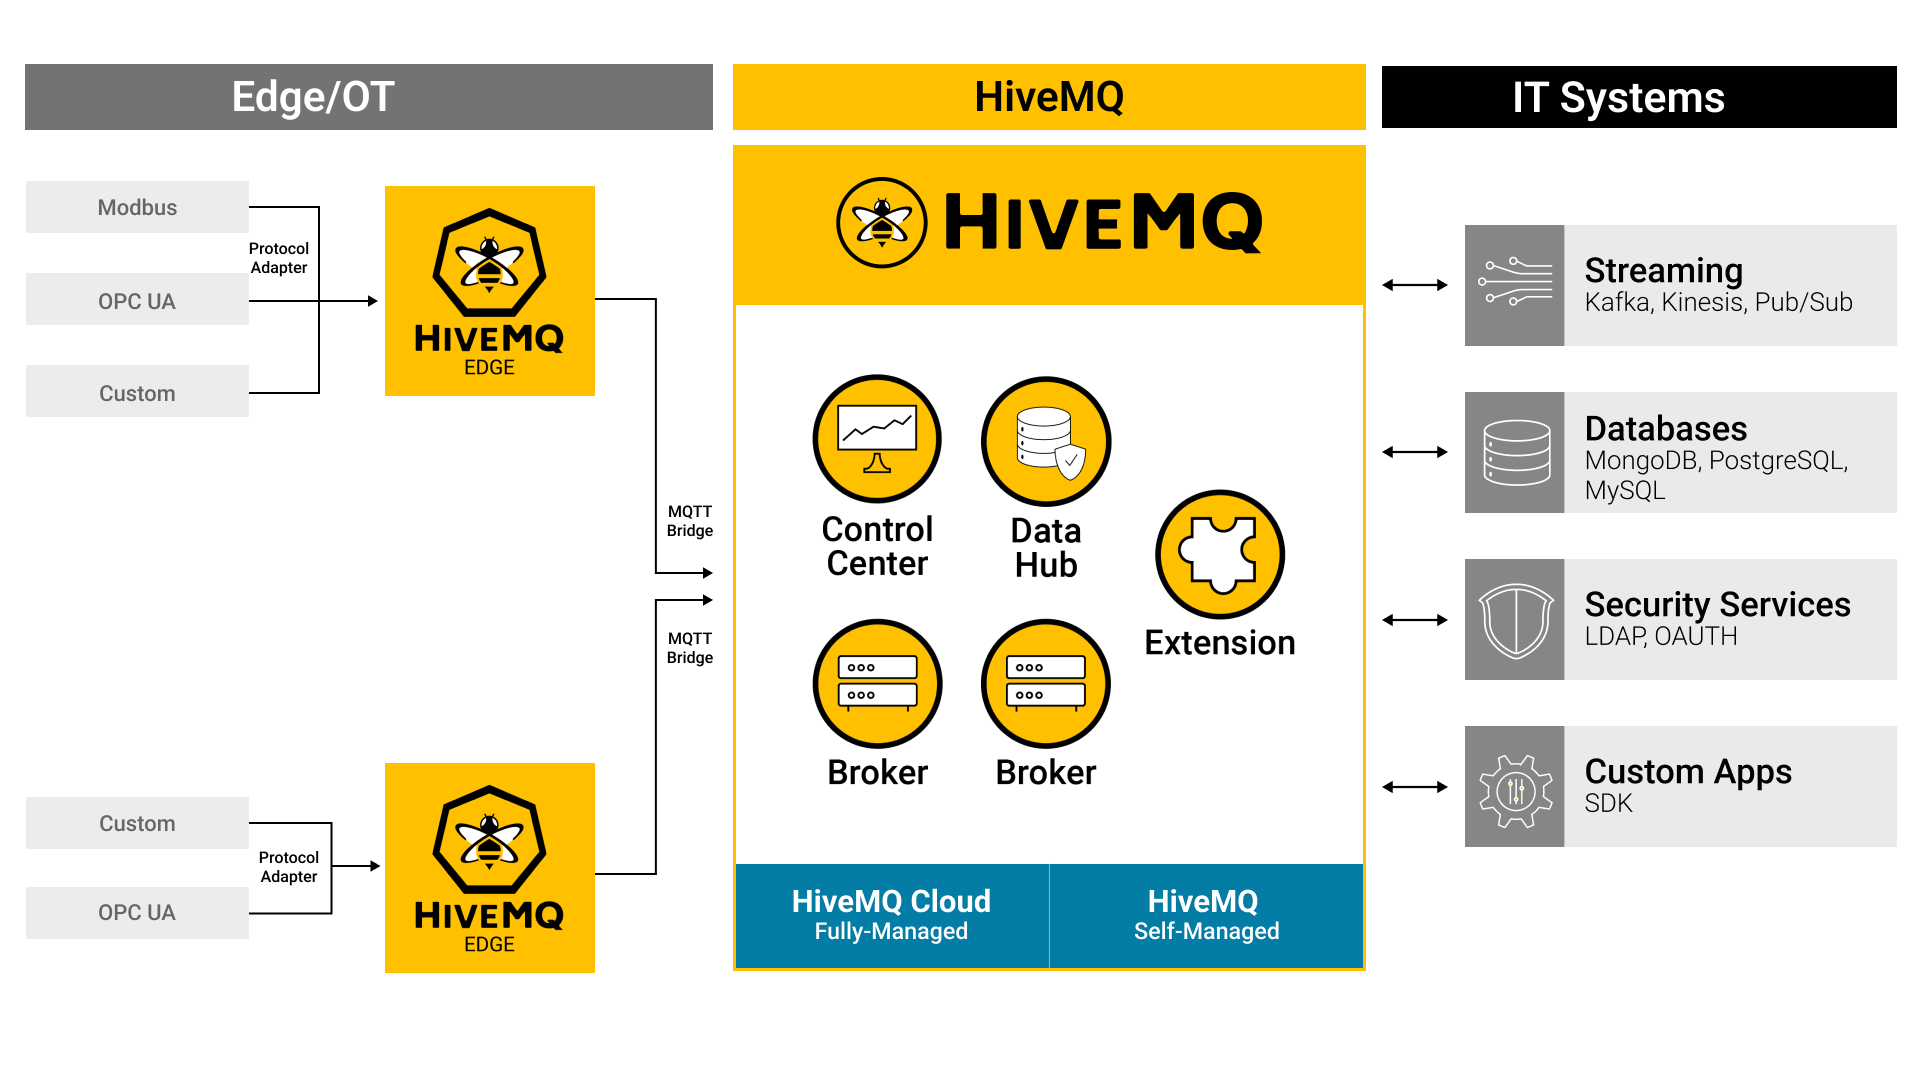 HiveMQ OT/IT Integration Architecture